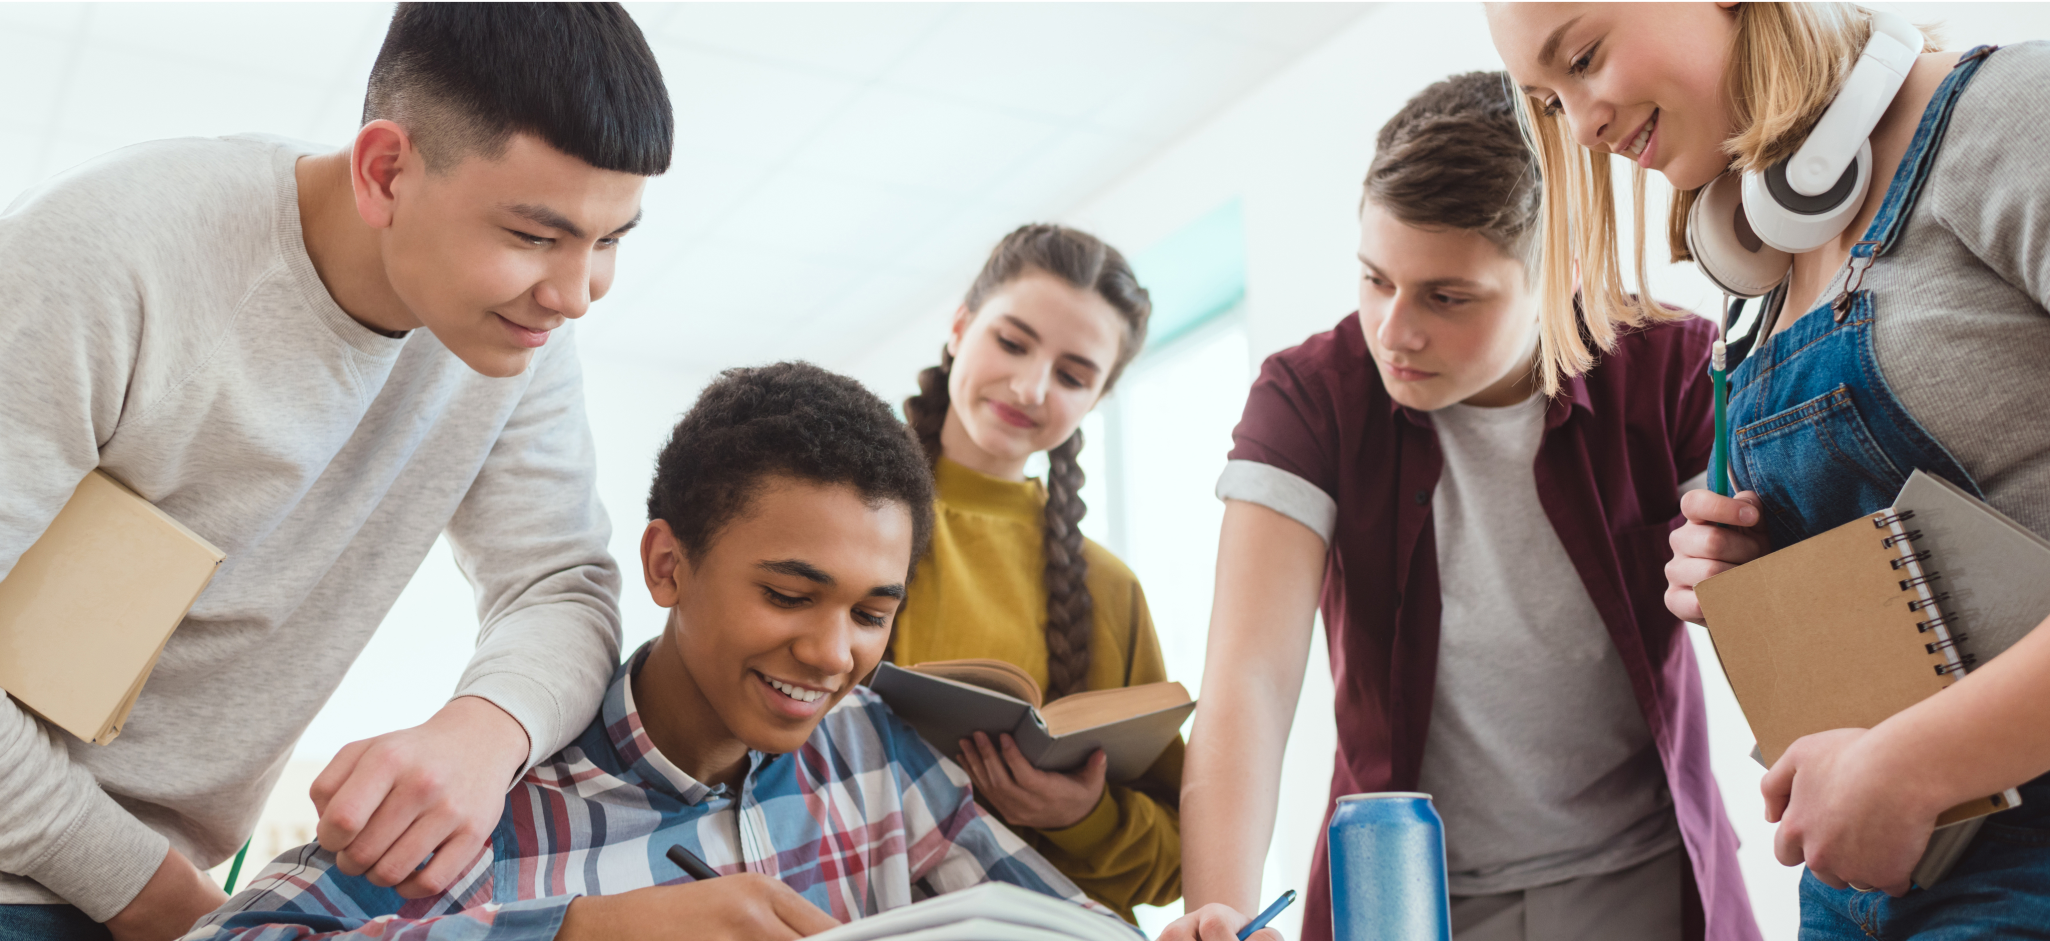 Wayfinder's SEL + 21st Century Skills Curriculum Boosts Student Purpose Nearly 75%